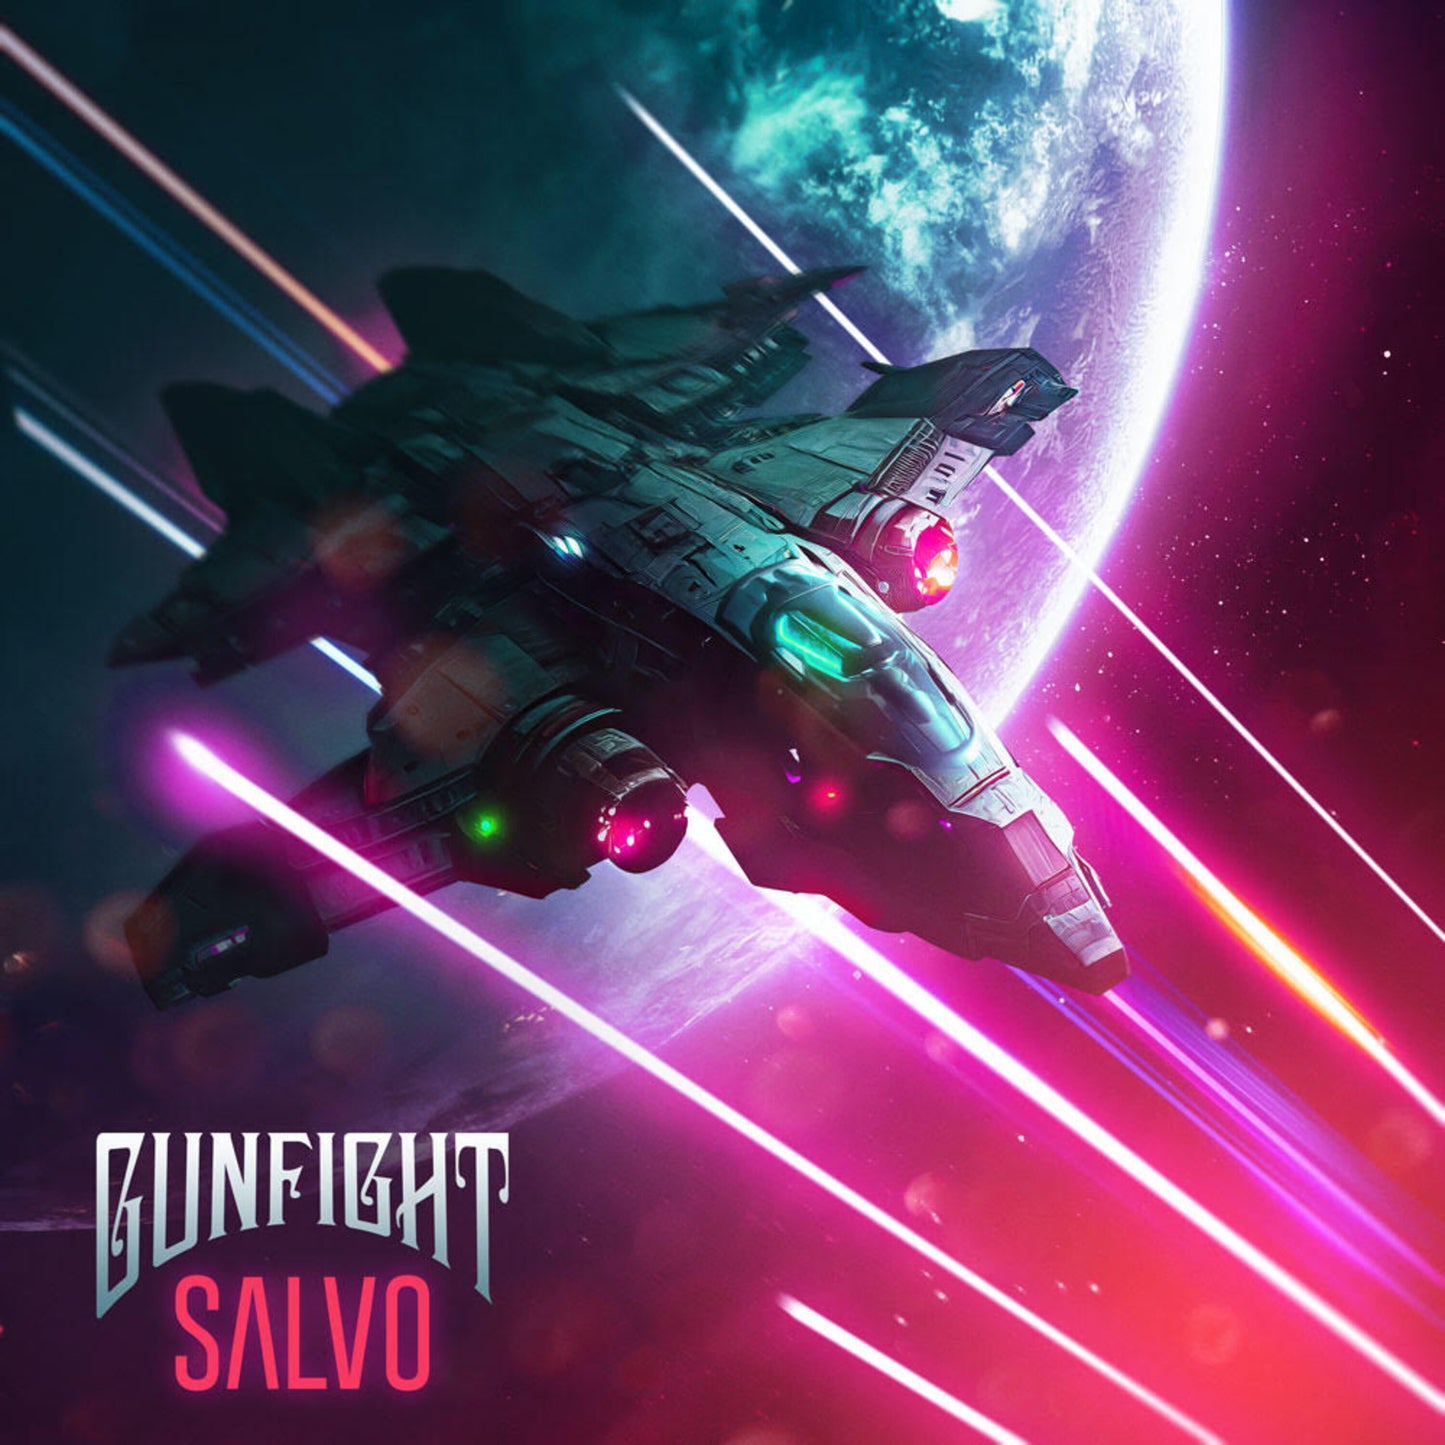 GunFight - Salvo